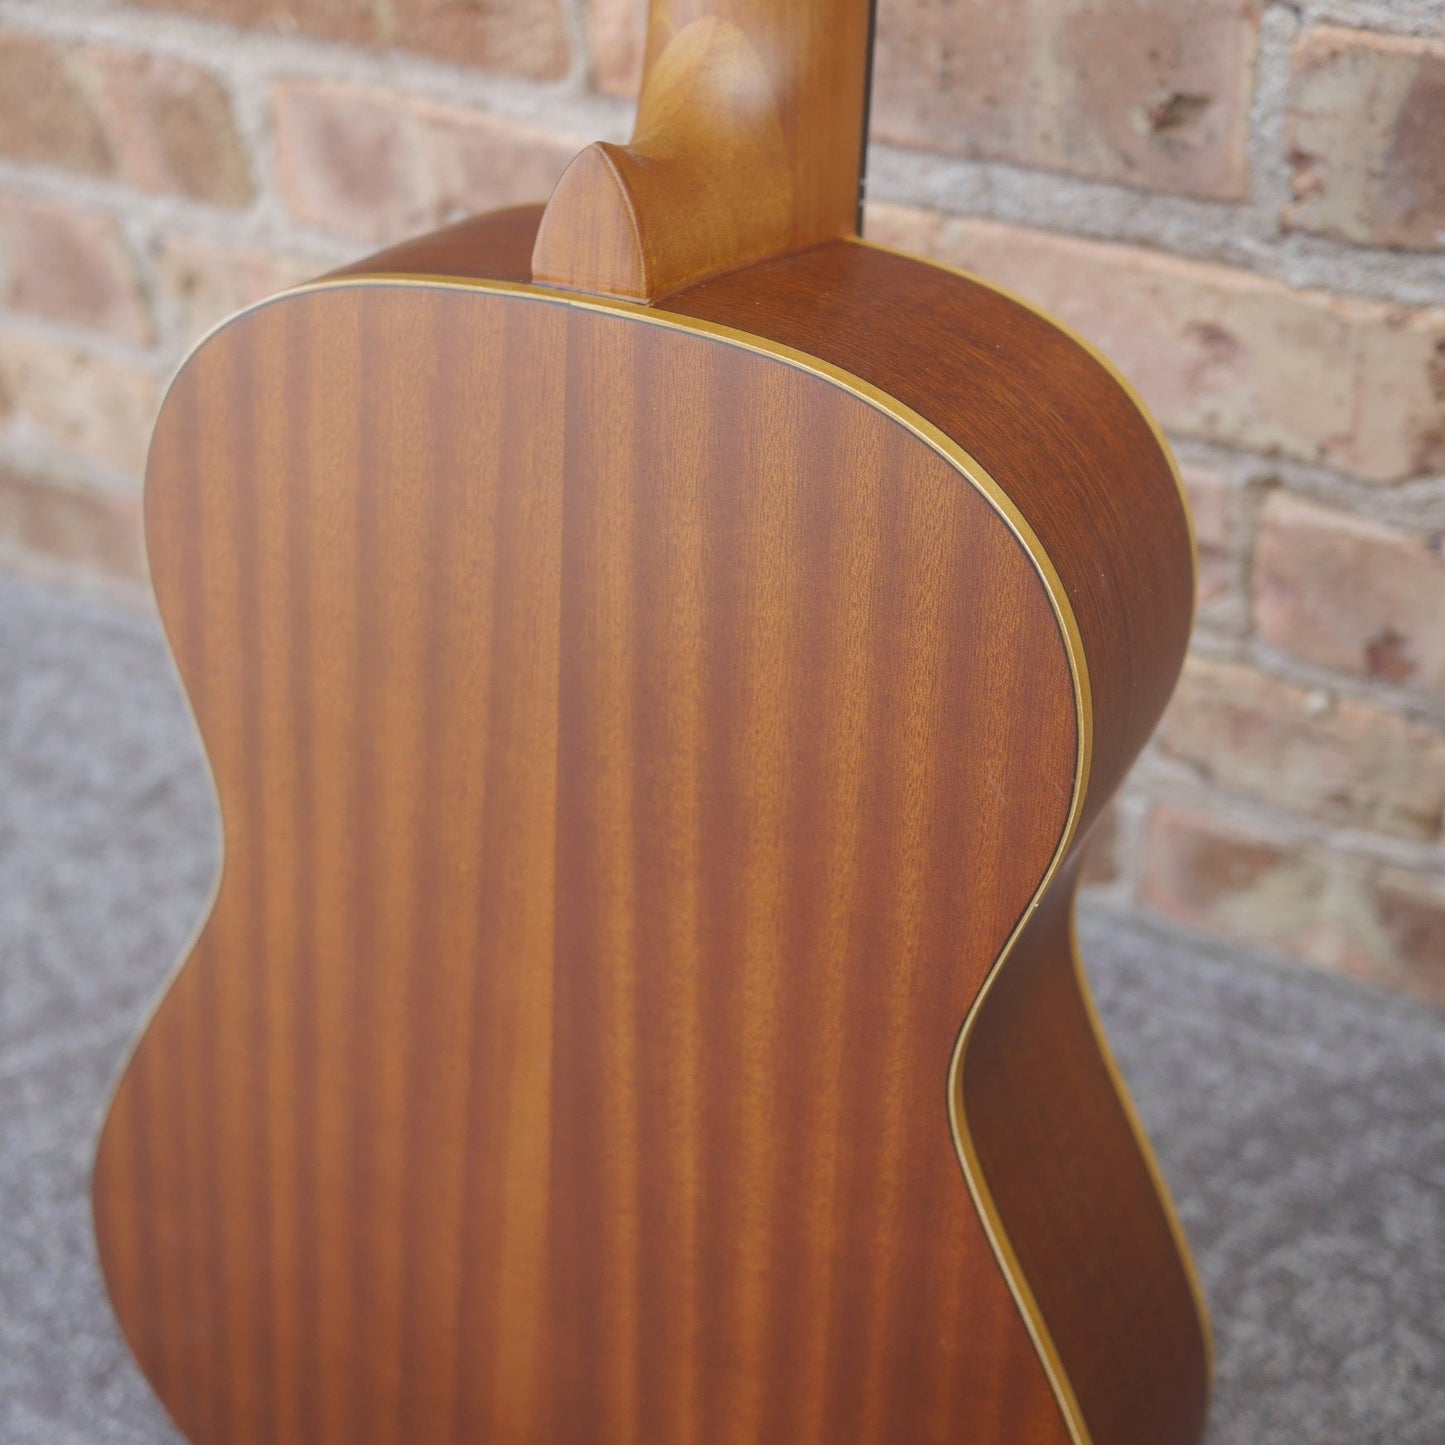 Ortega Family Series ½ Size Nylon String Guitar